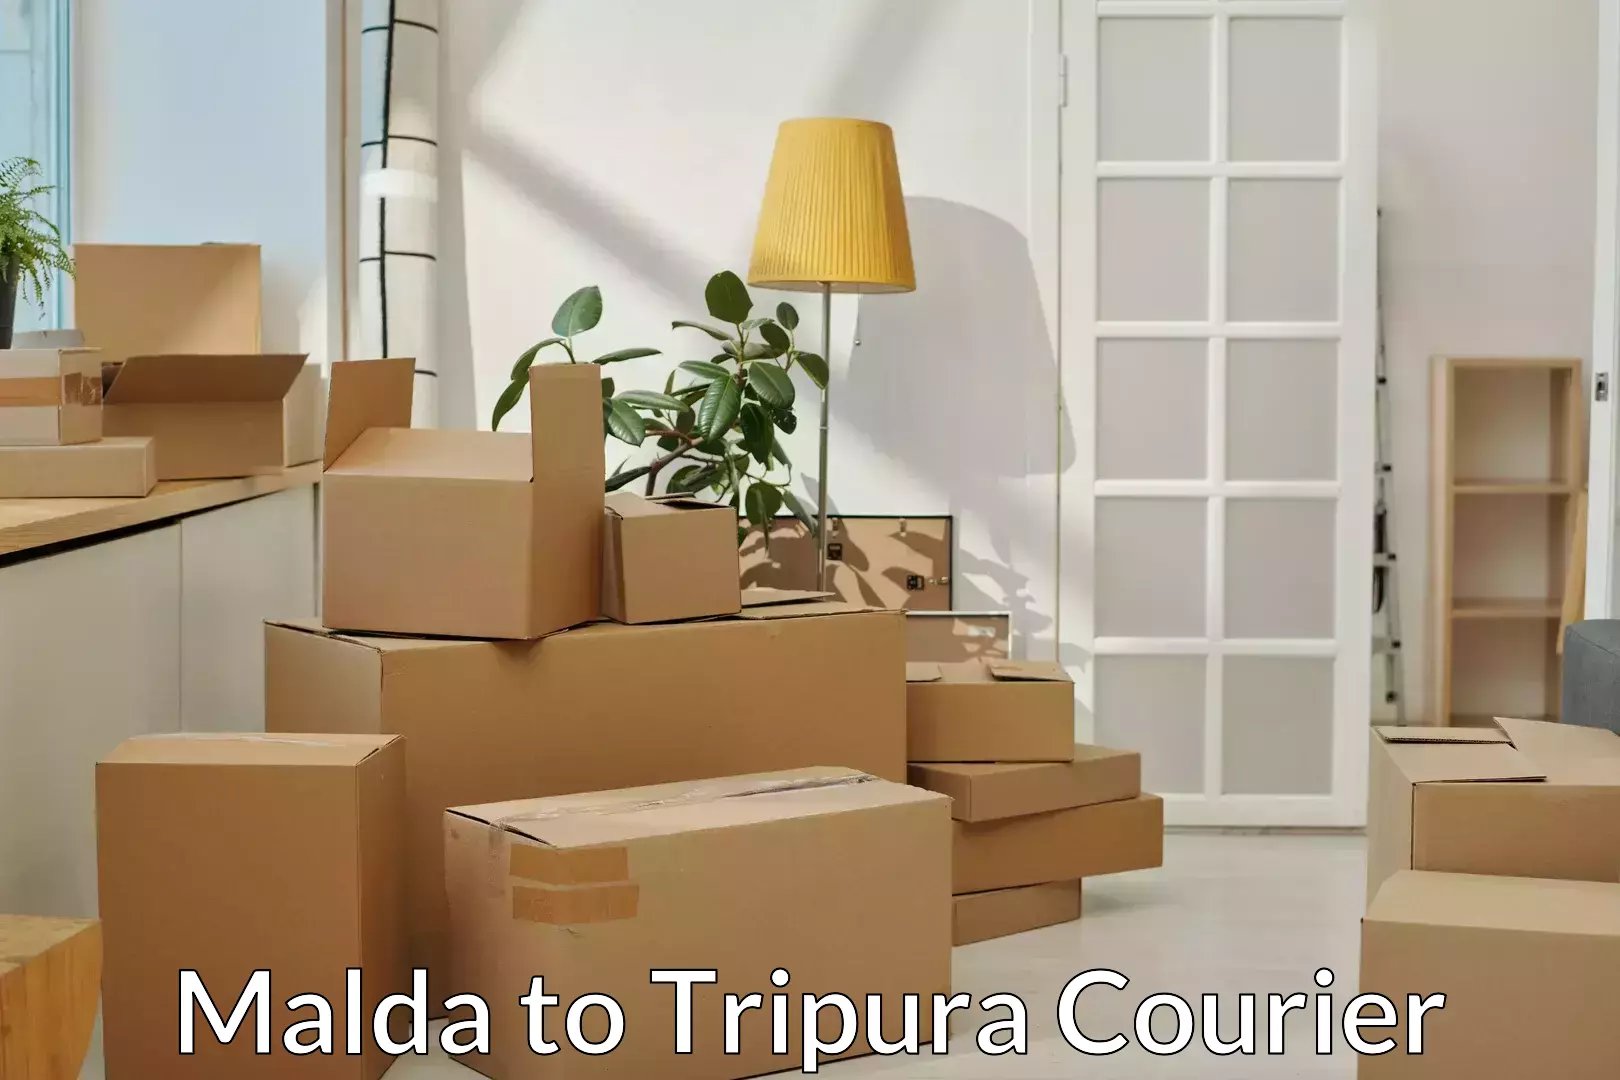 Professional moving company Malda to Agartala